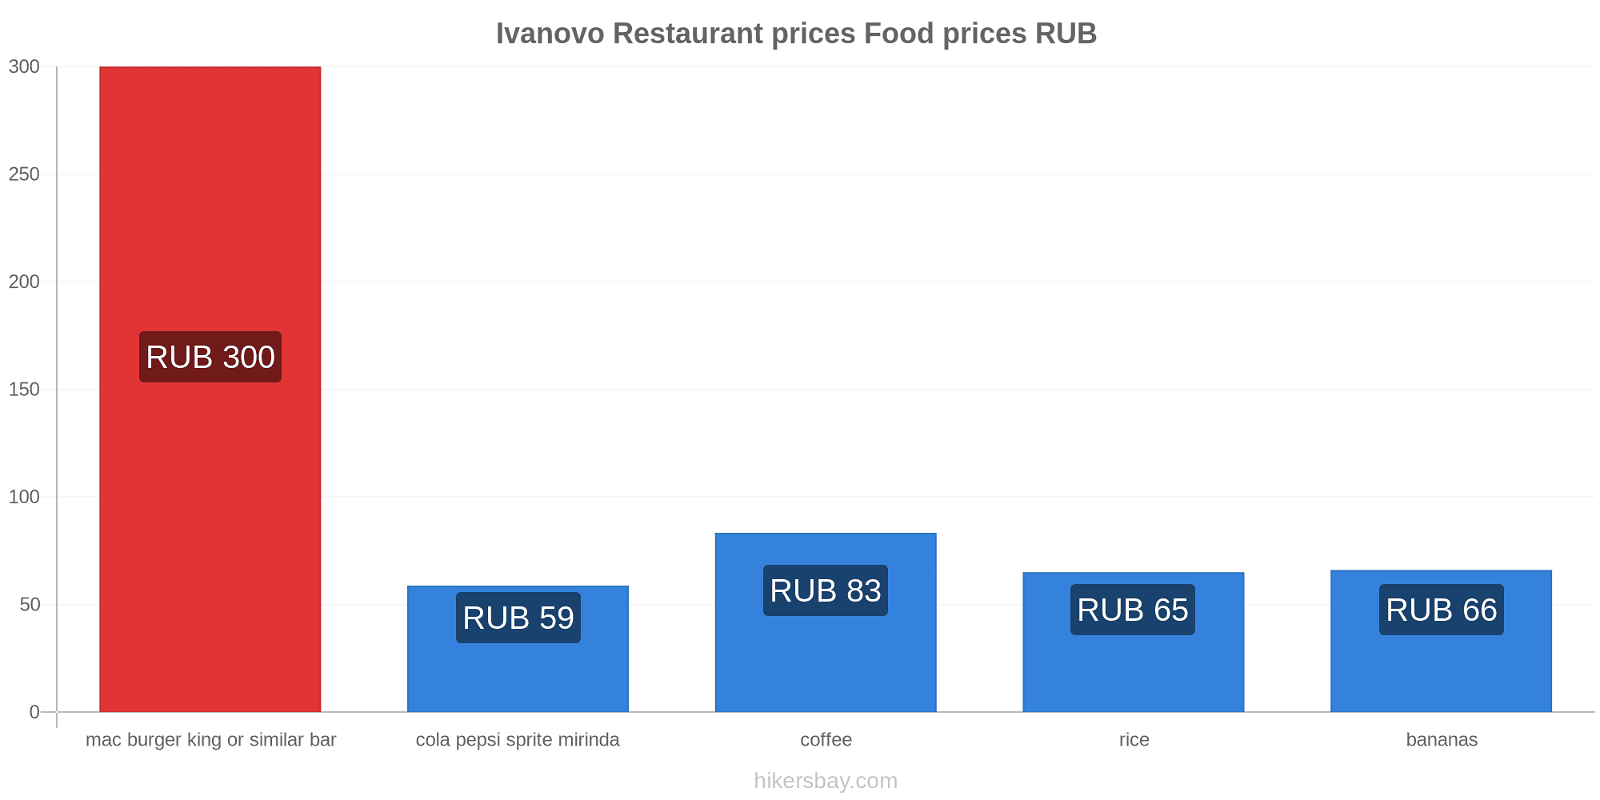 Ivanovo price changes hikersbay.com